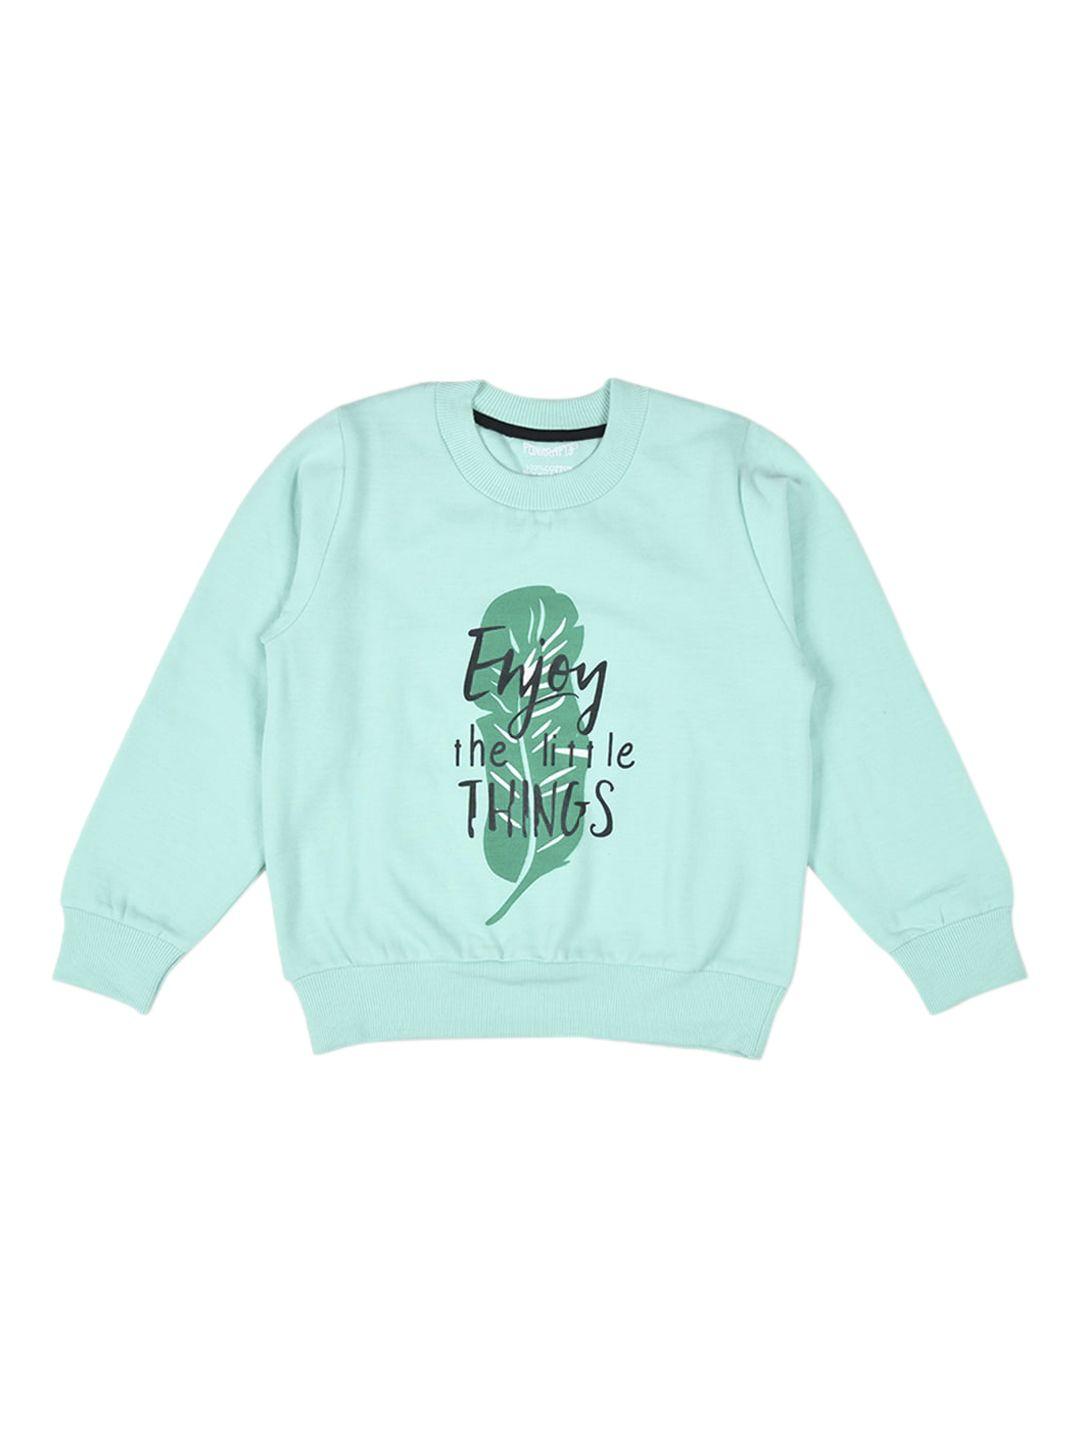 funkrafts unisex kids green printed fleece sweatshirt